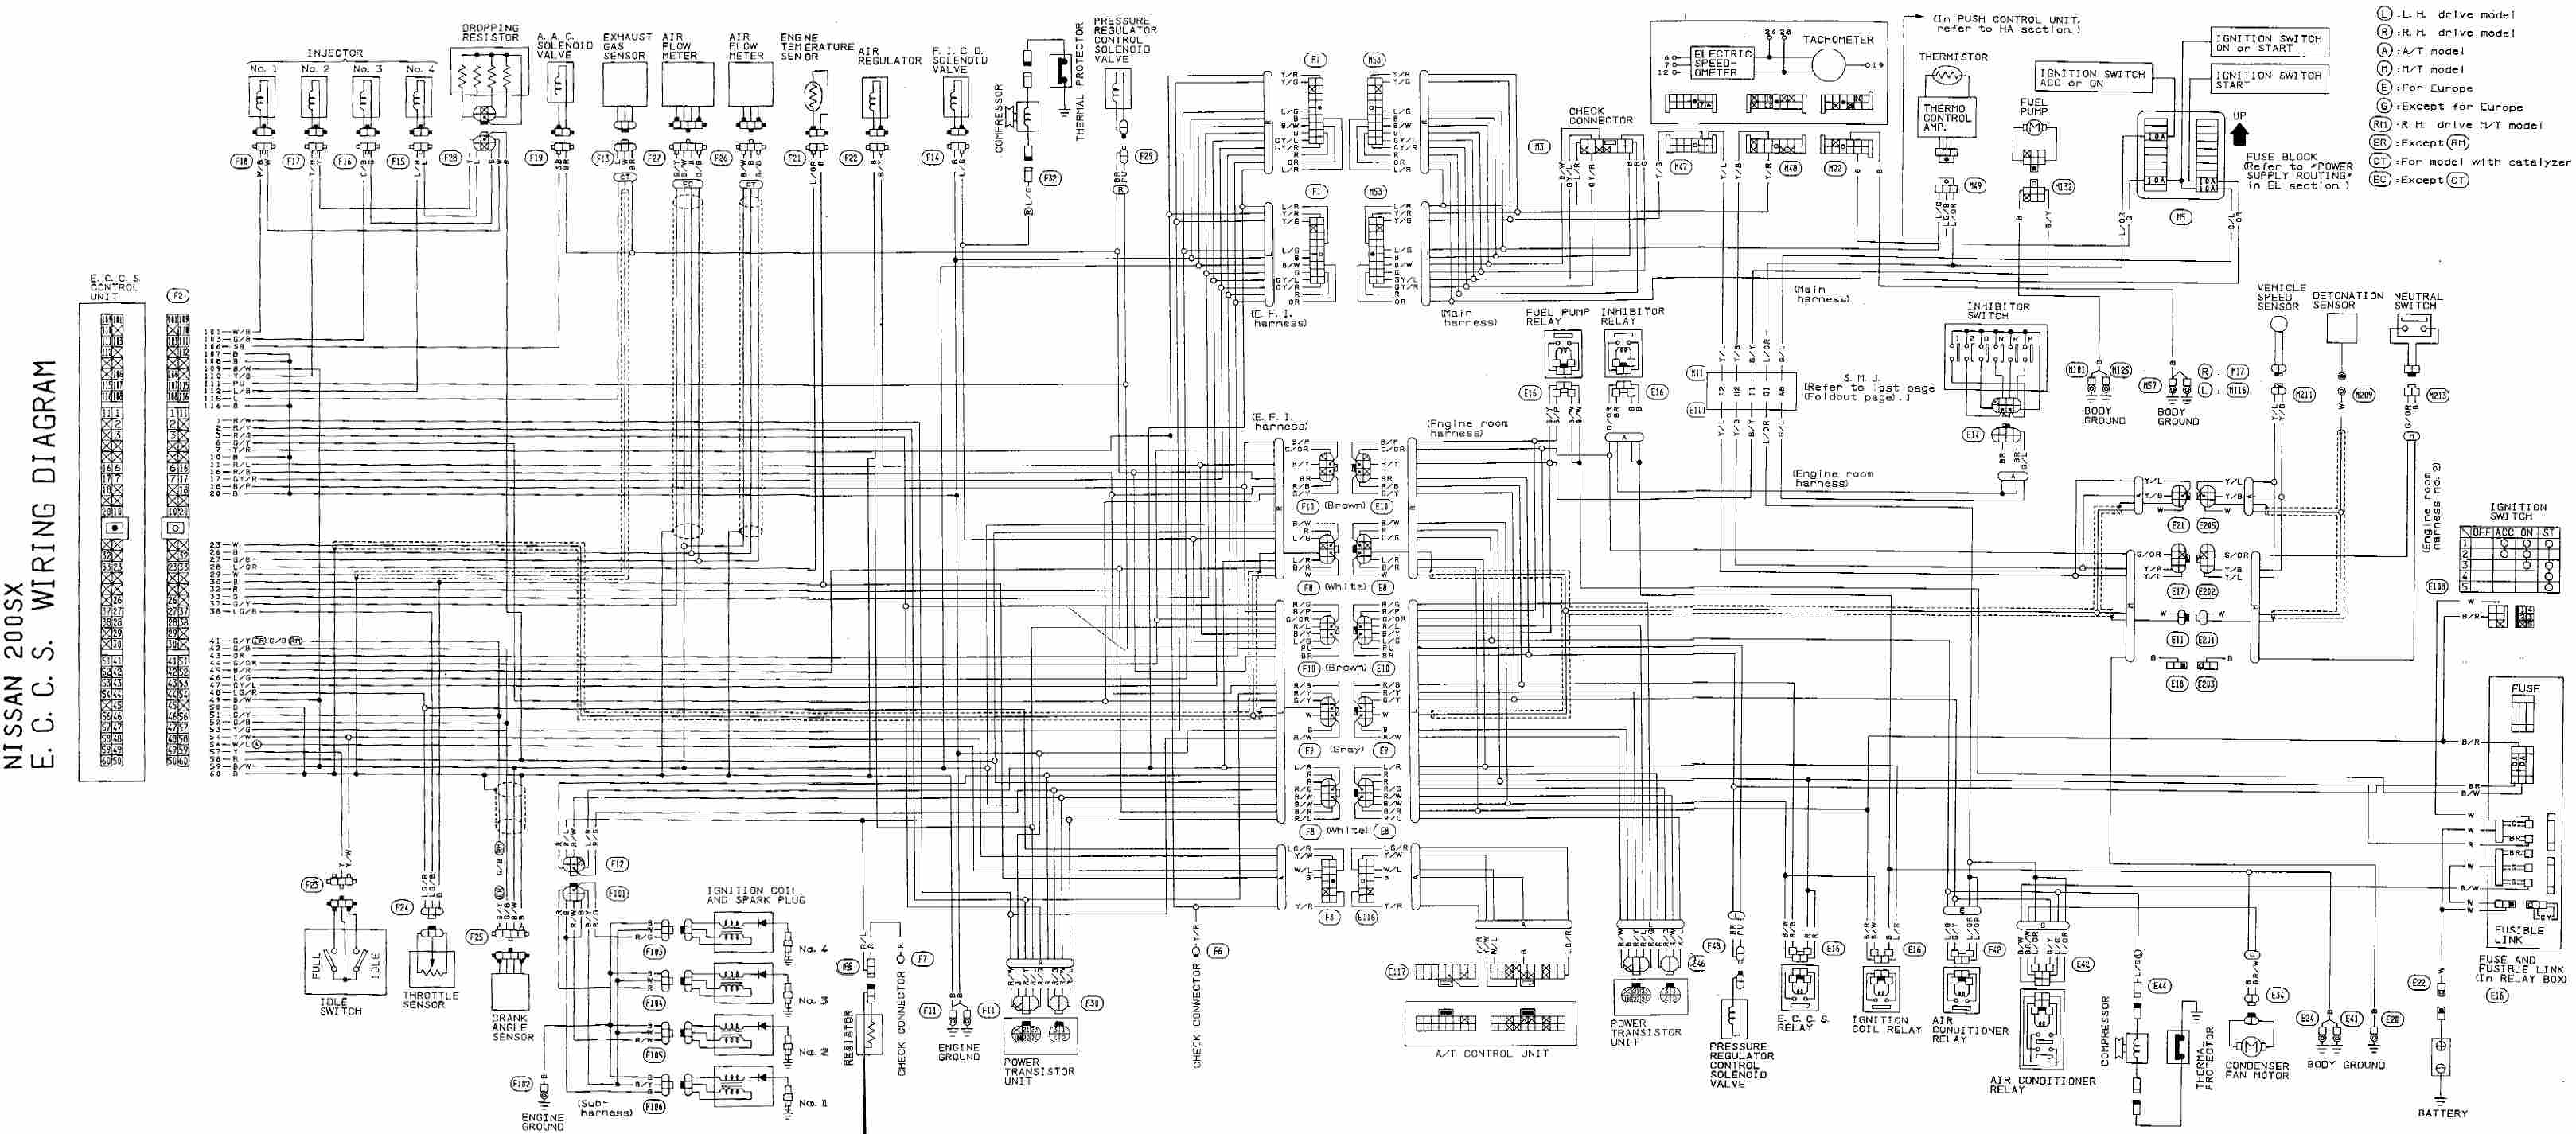 ihi 28n ignition wiring diagram